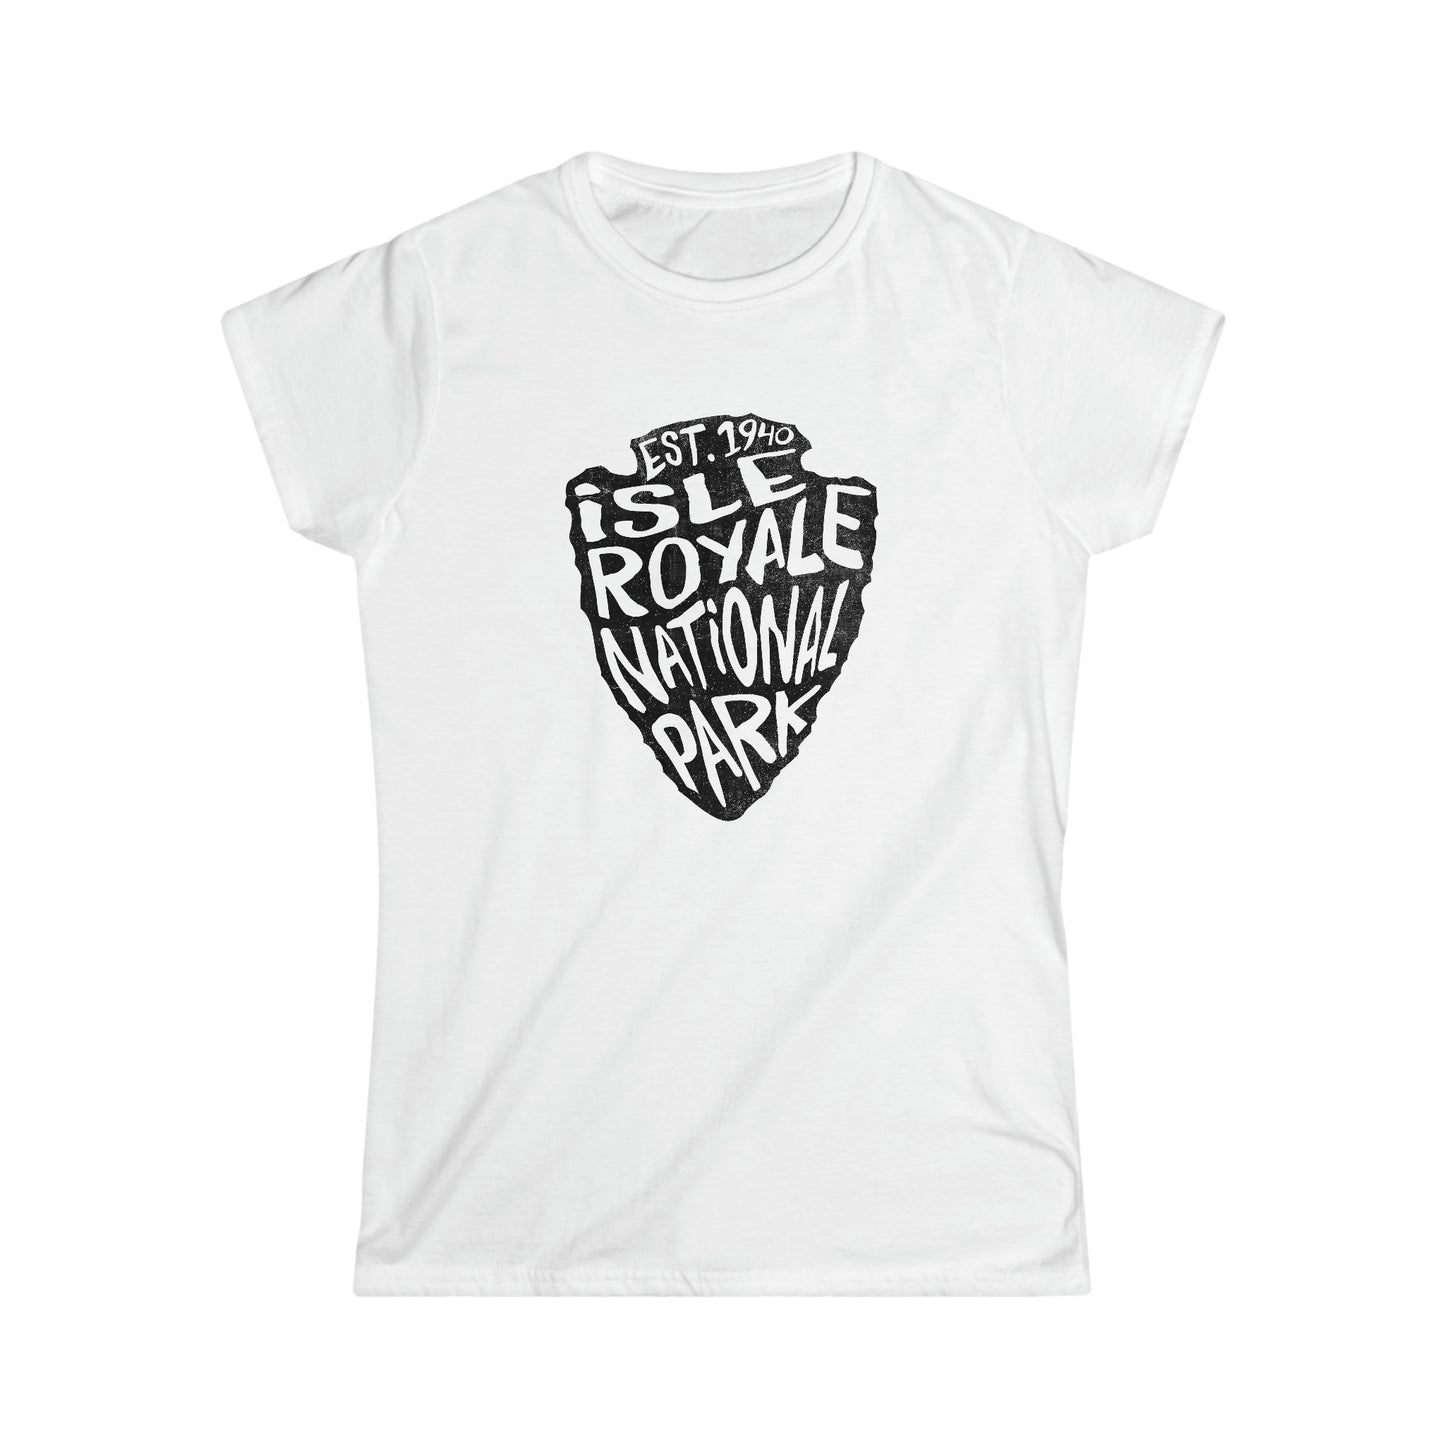 Isle Royale National Park Women's T-Shirt - Arrowhead Design